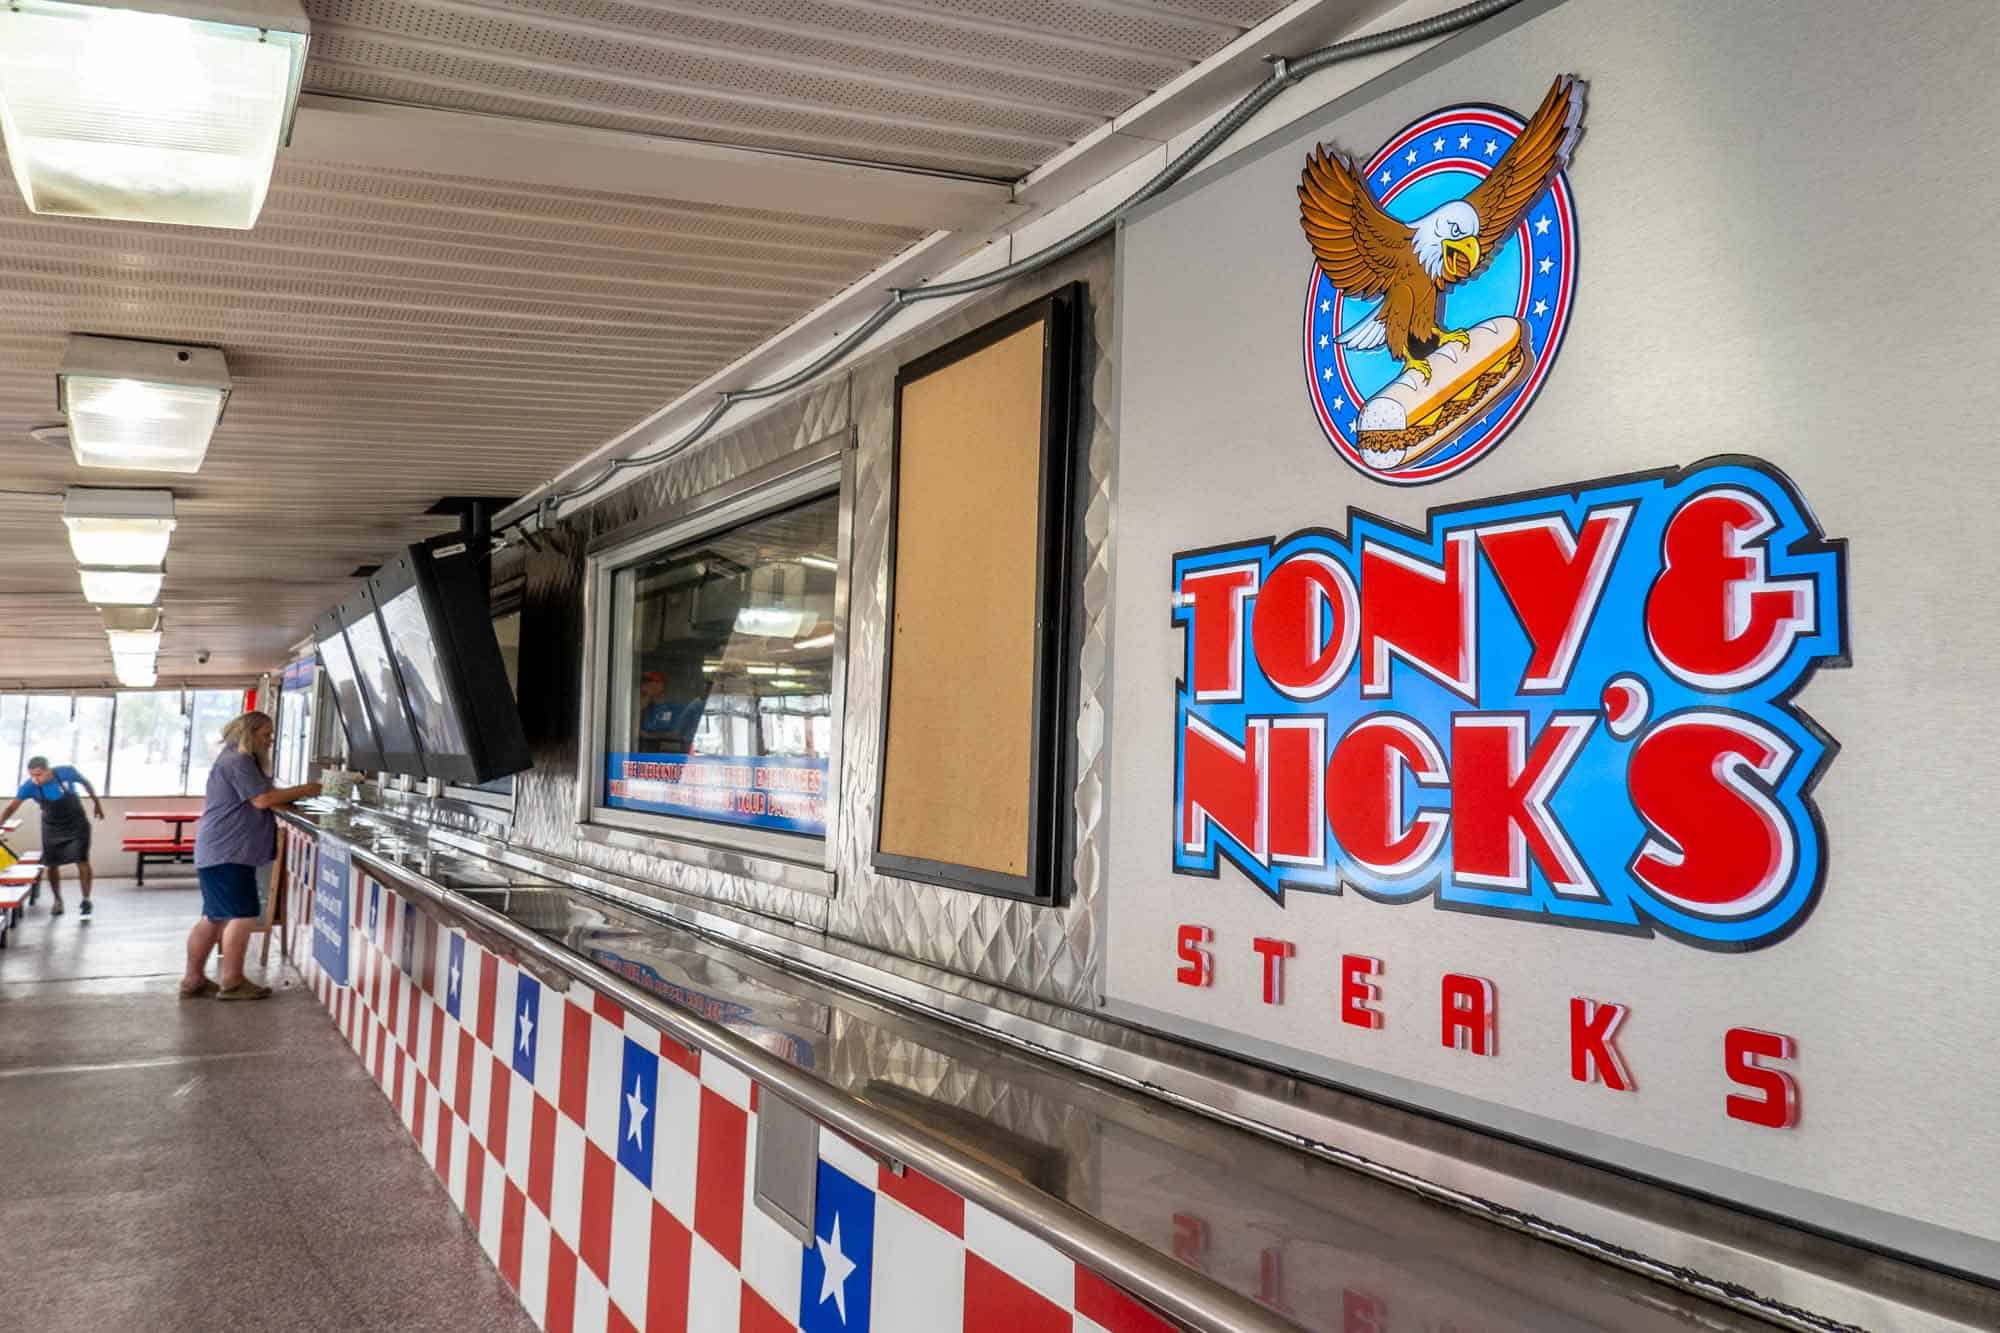 Sign reading "Tony & Nick's Steaks"